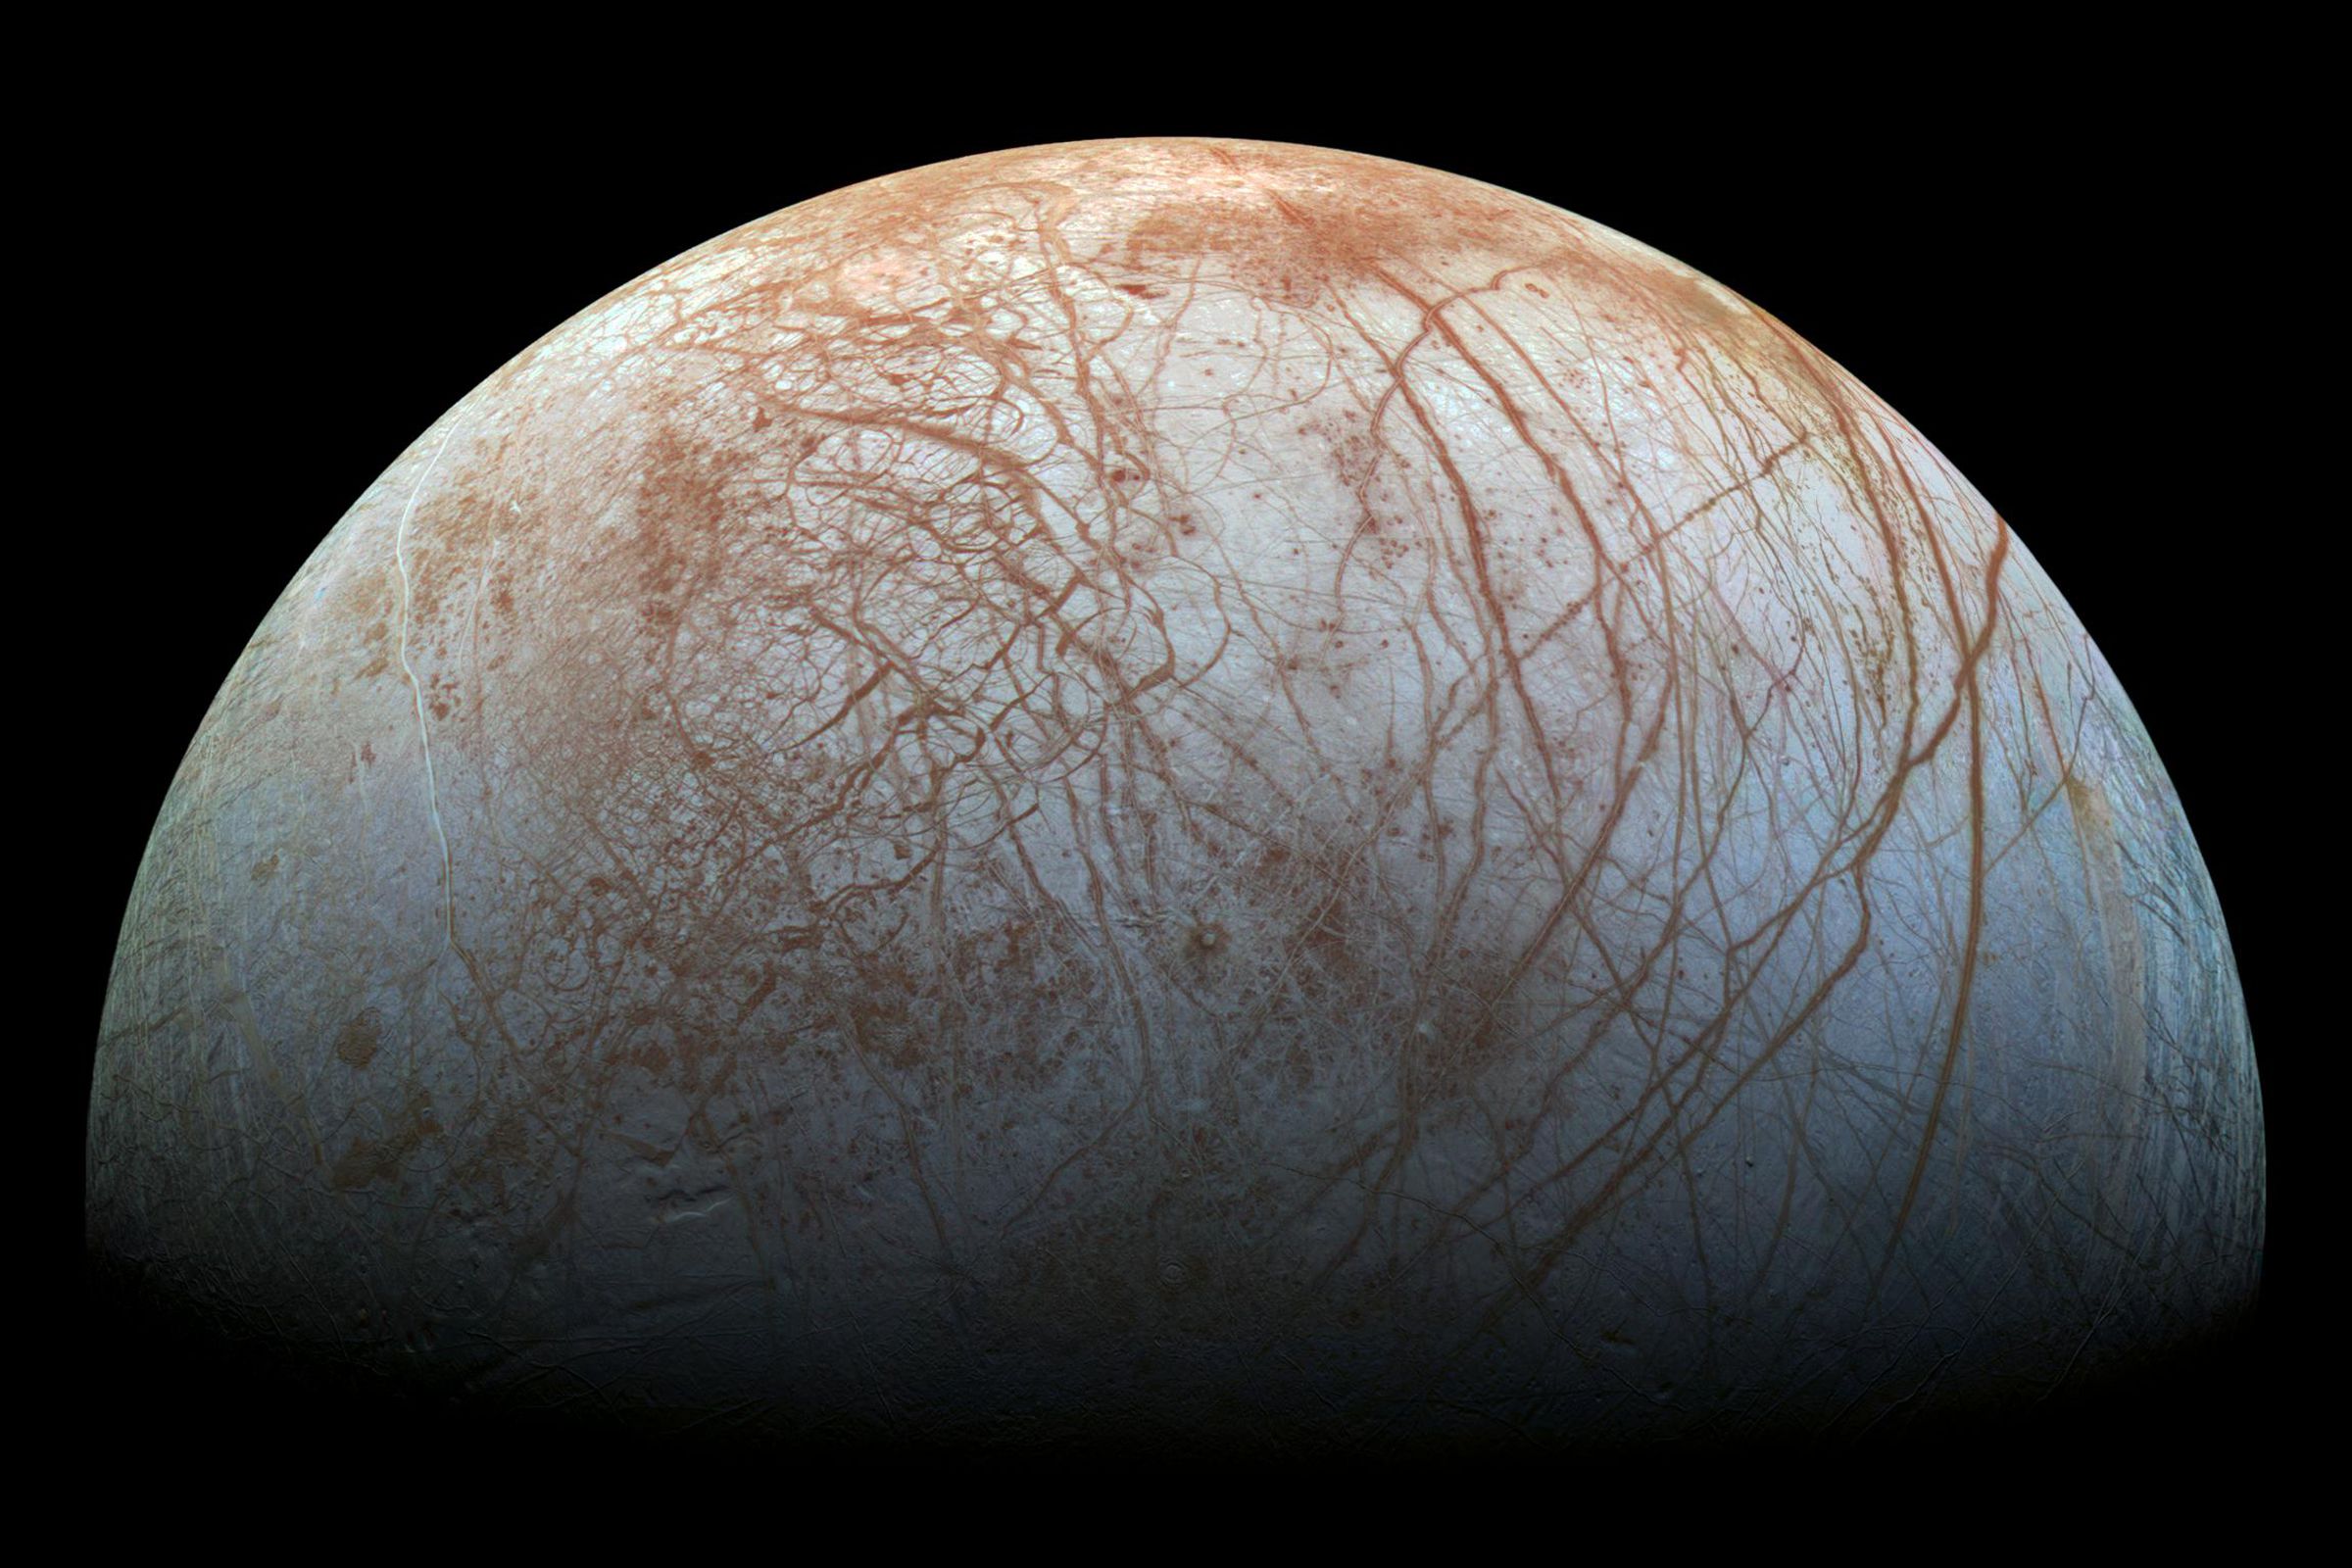 Jupiter’s moon Europa, as seen from NASA’s Galileo spacecraft